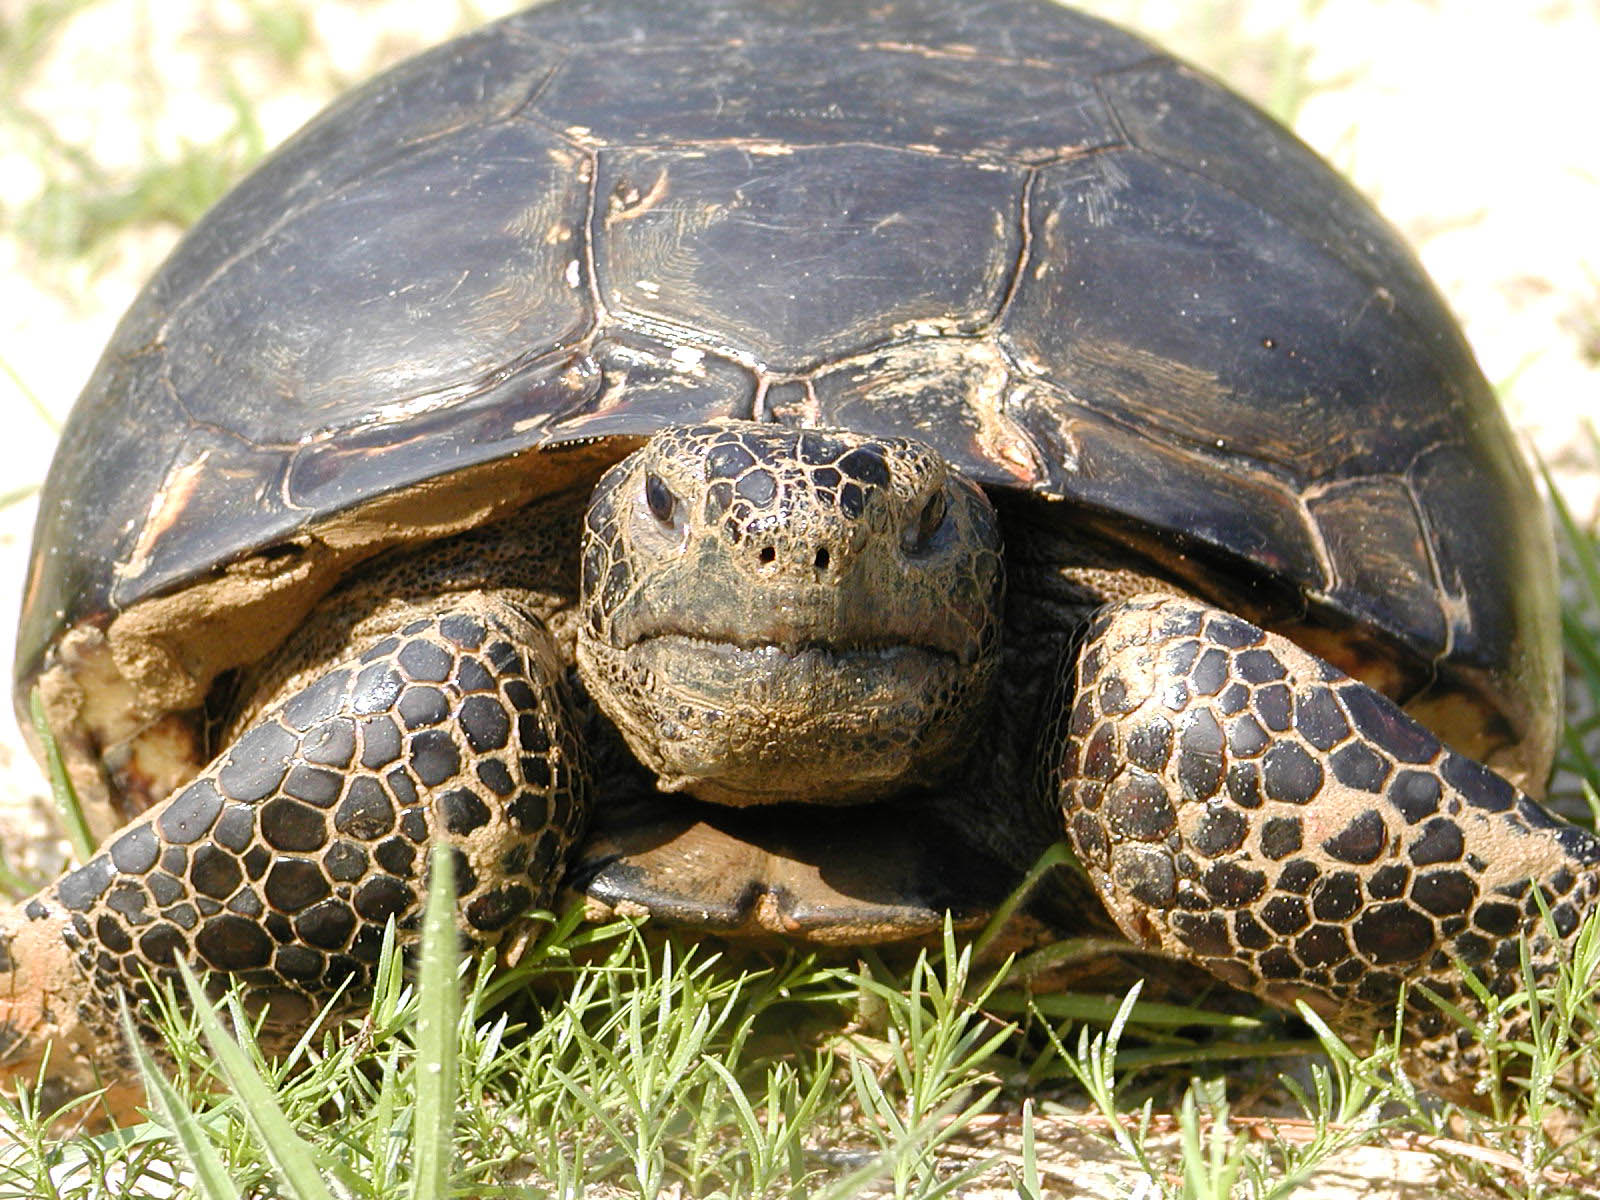 Tortoise breeder accused of witchcraft